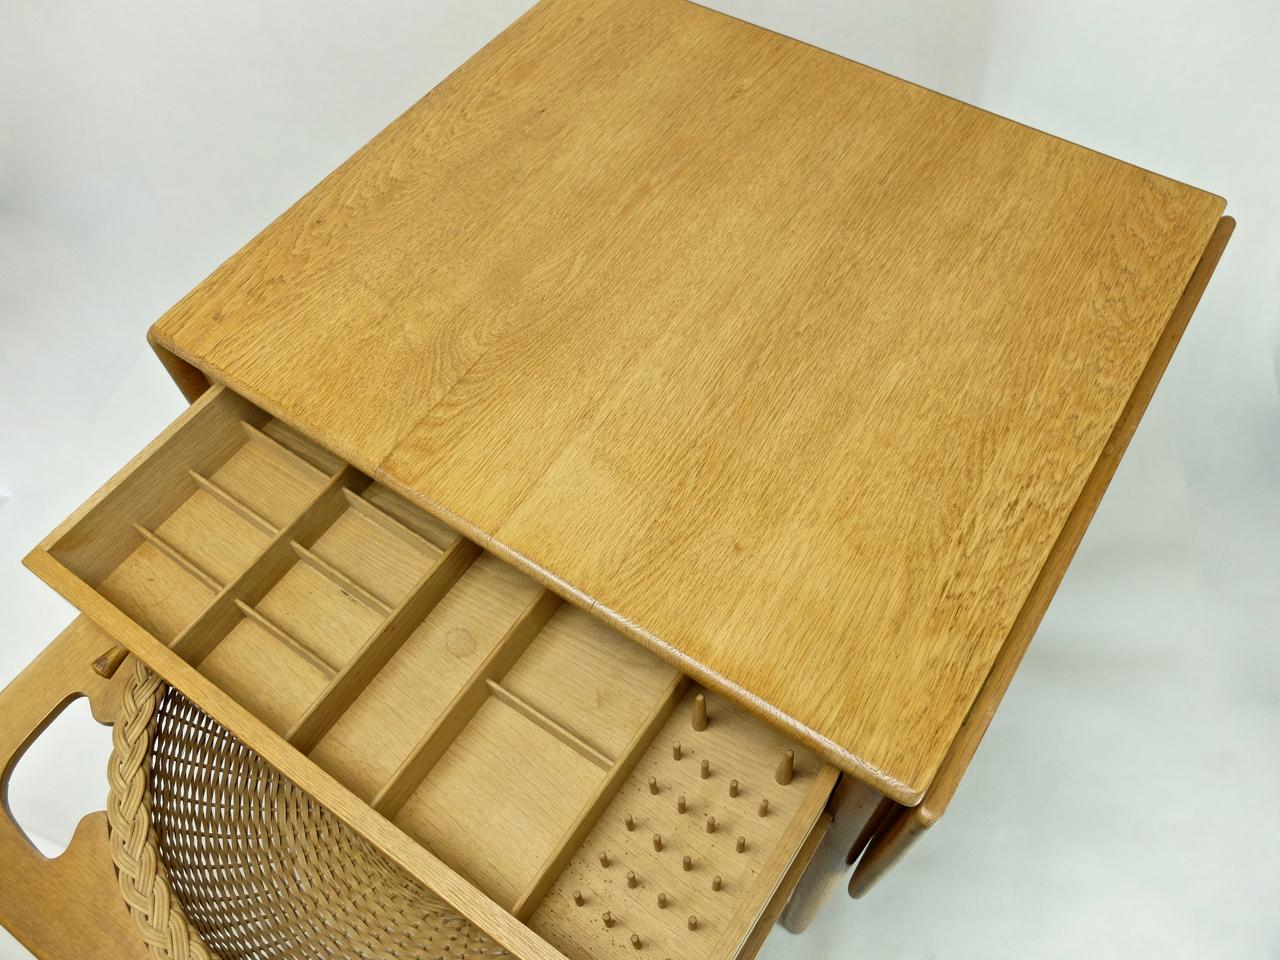 Sewing table AT-33 by Hans J. Wegner in Oak for Tuck in Denmark 1